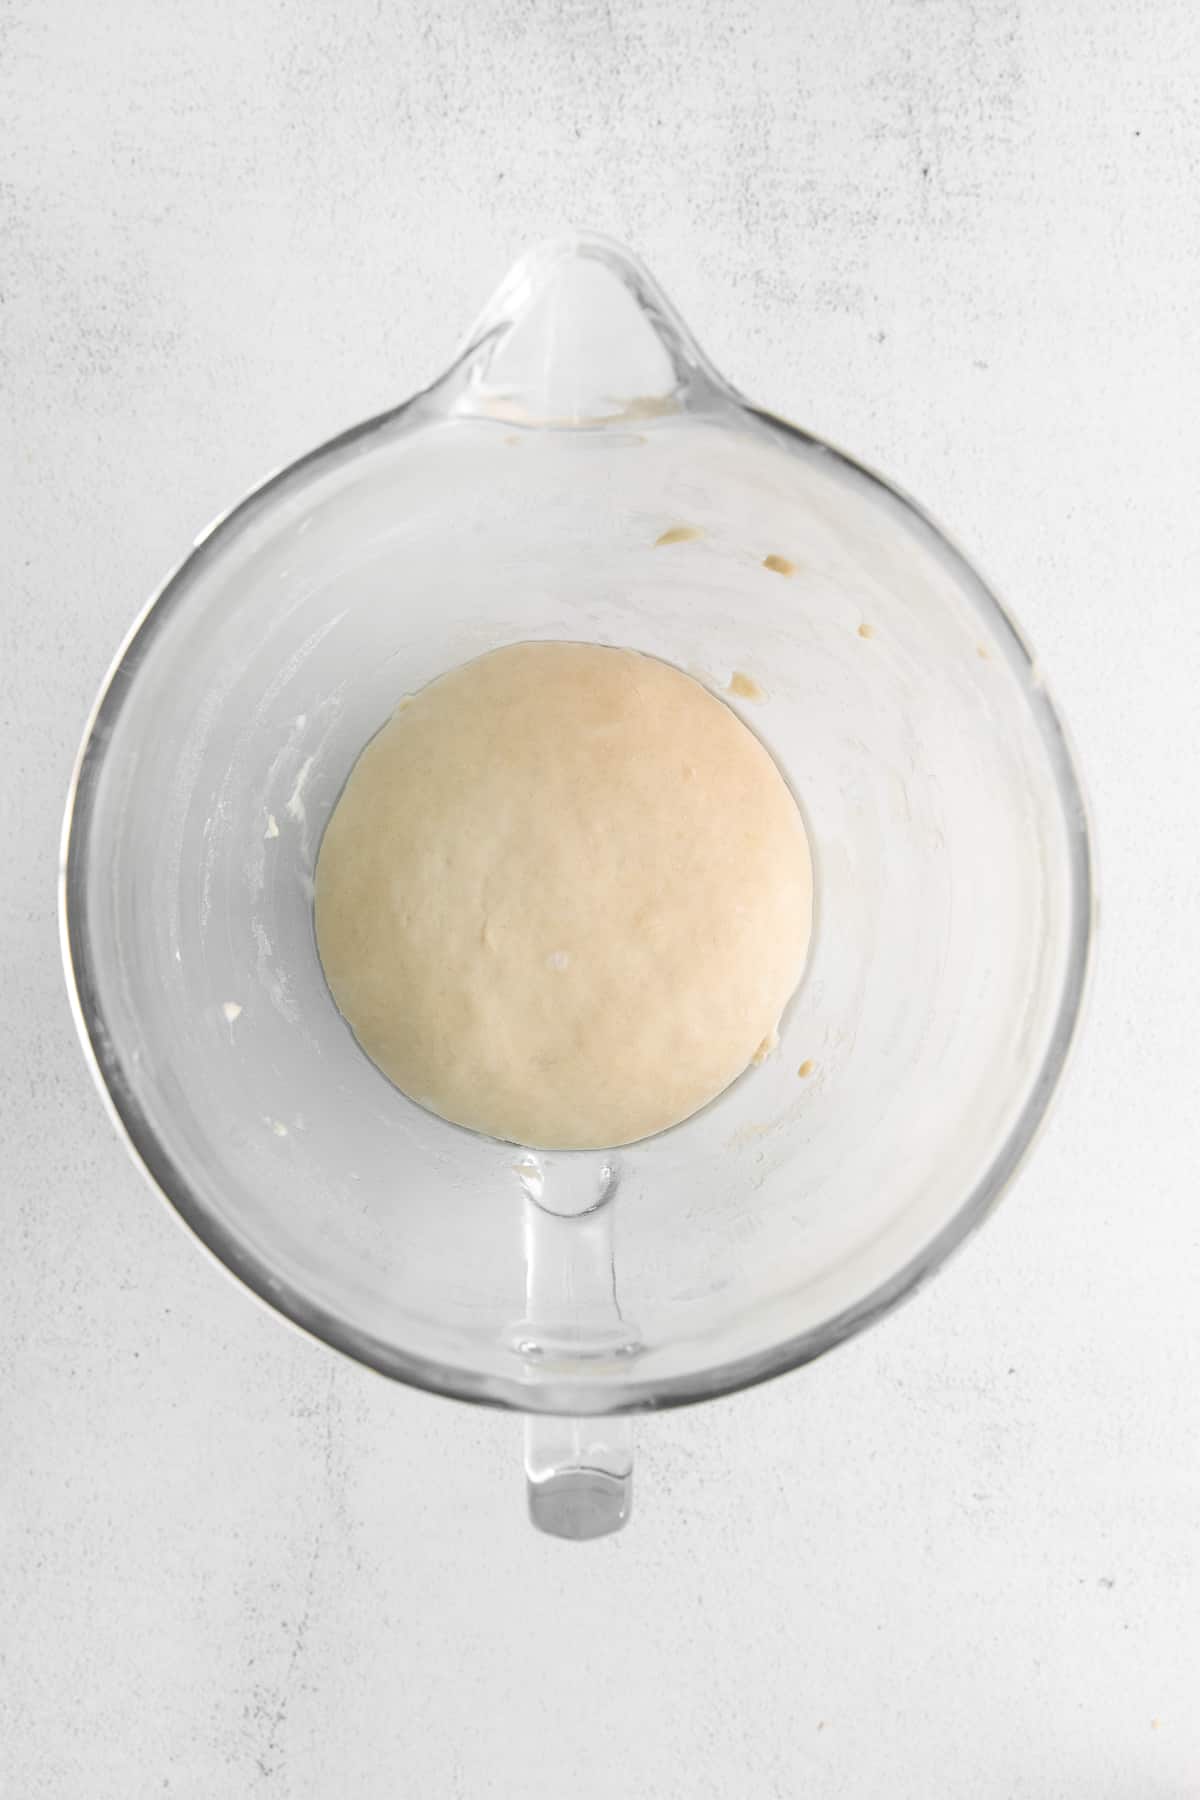 Cheese bread dough in a bowl.